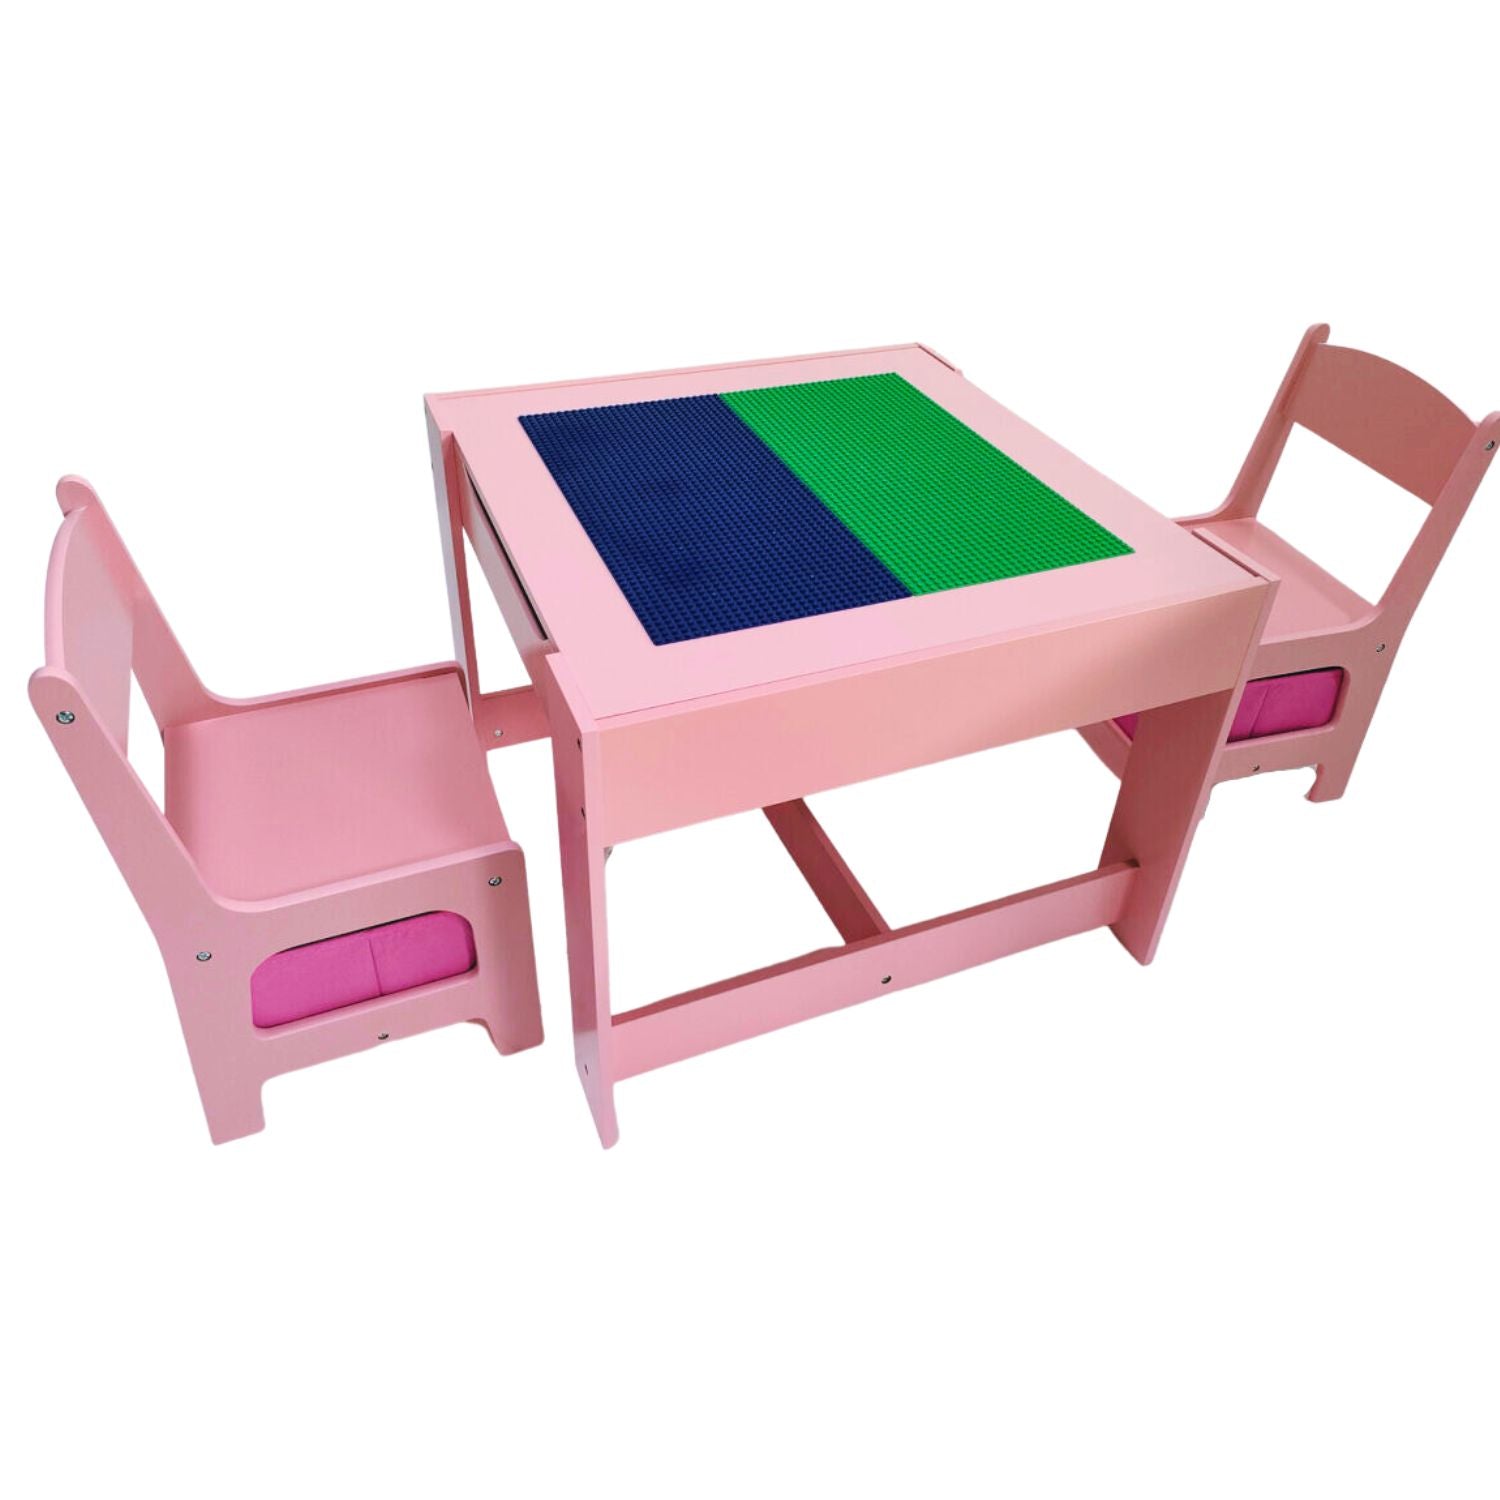 EKKIO 3PCS Kids Table with Lego Baseplate and Chairs Set with Black Chalkboard (Pink) EK-KTCS-105-RHH - SILBERSHELL